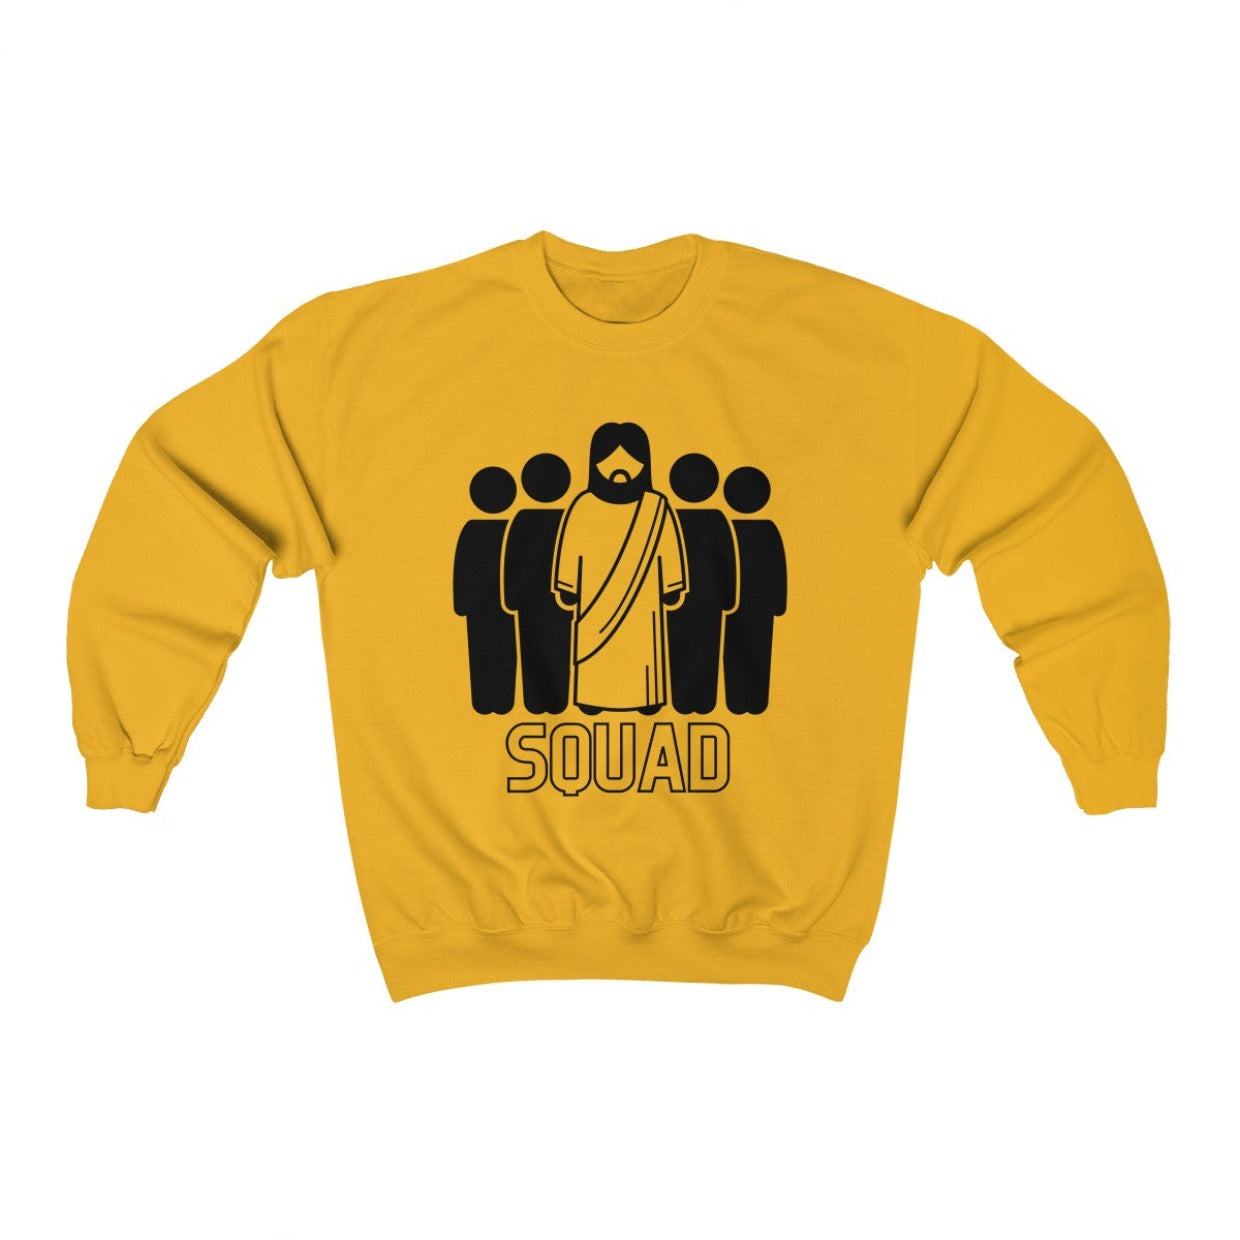 Squad - Adult Christian Sweatshirt | LifeSpring Shirts - LifeSpring Shirts